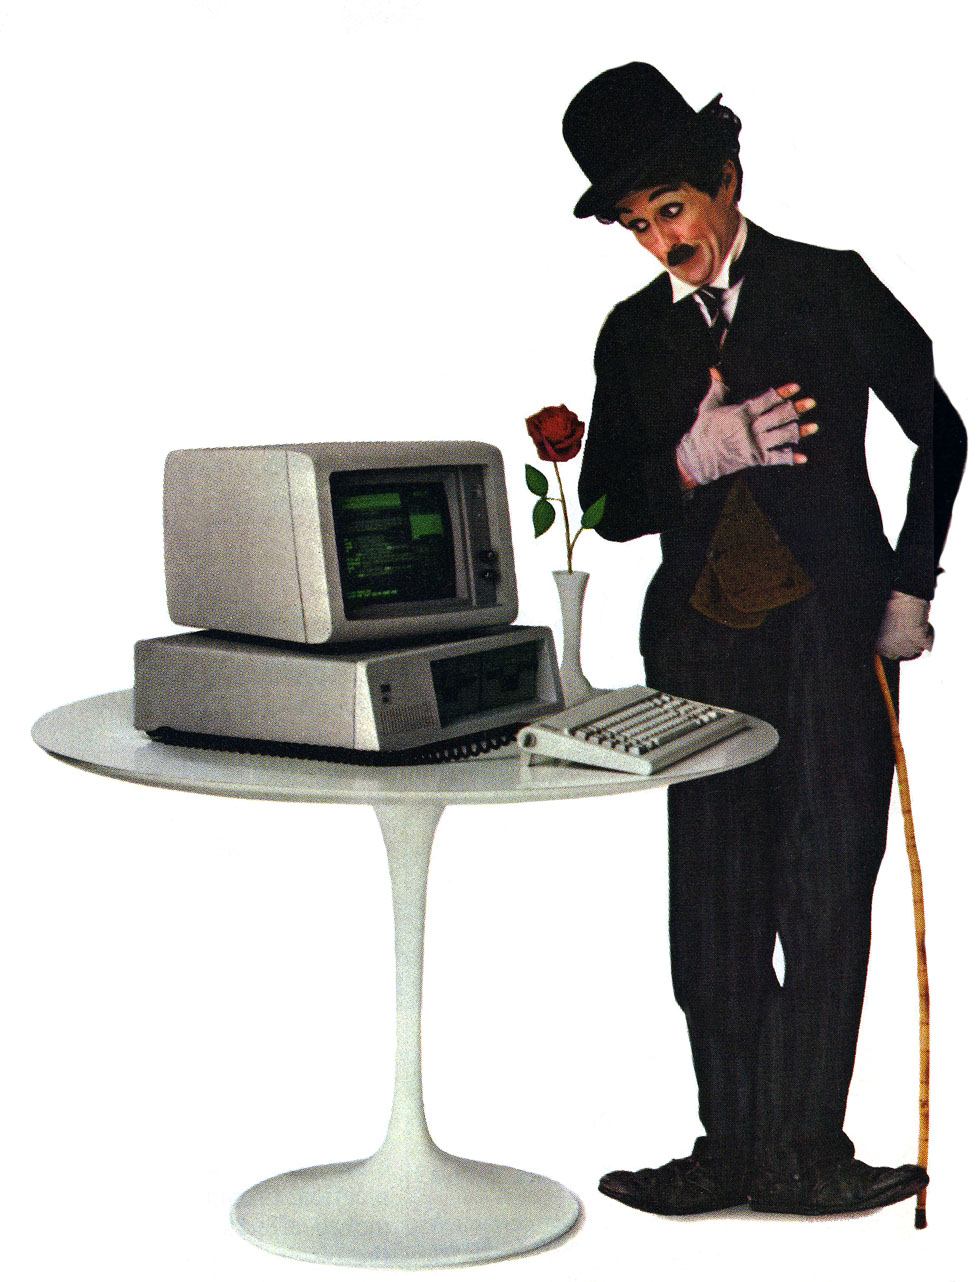 http://www.digibarn.com/stories/ibm-pc-25/images/IBM-PC-PerCon-83.jpg